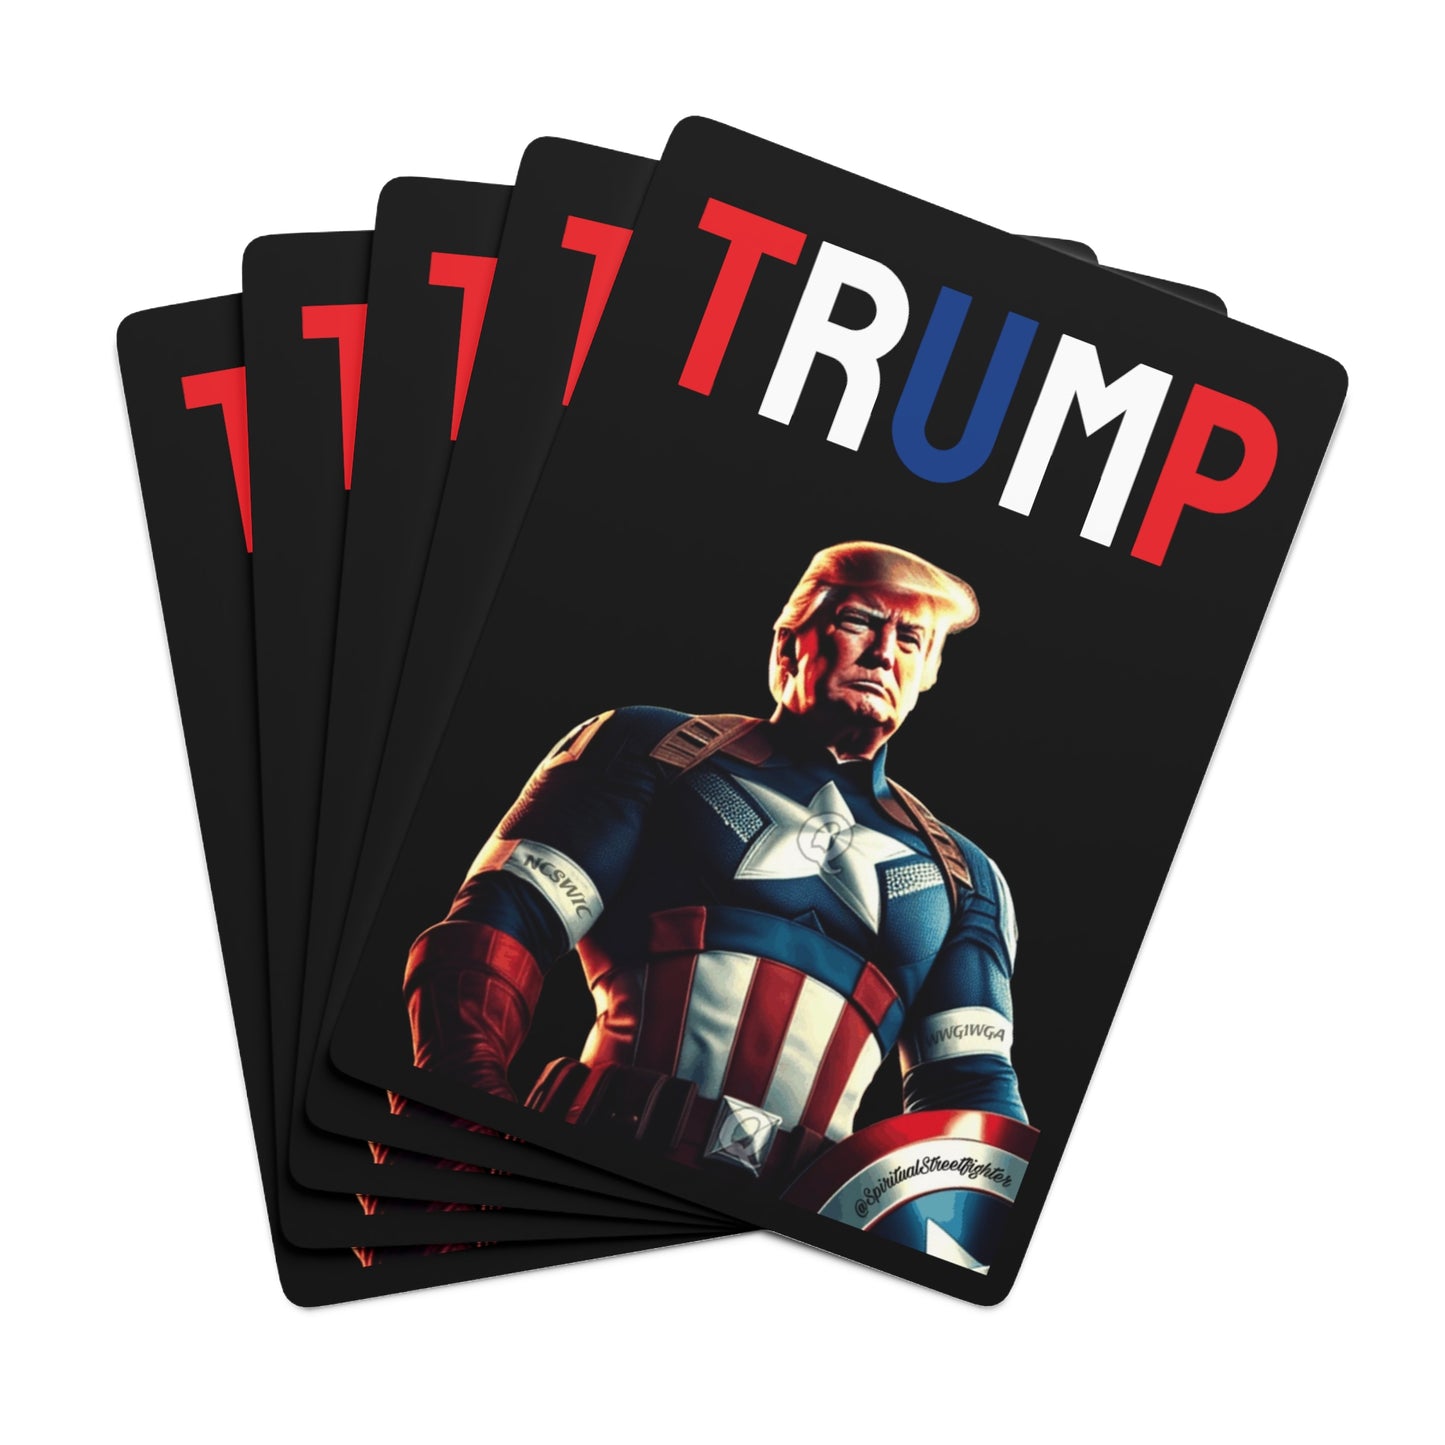 Trump Captain America spielt Pokerkarten